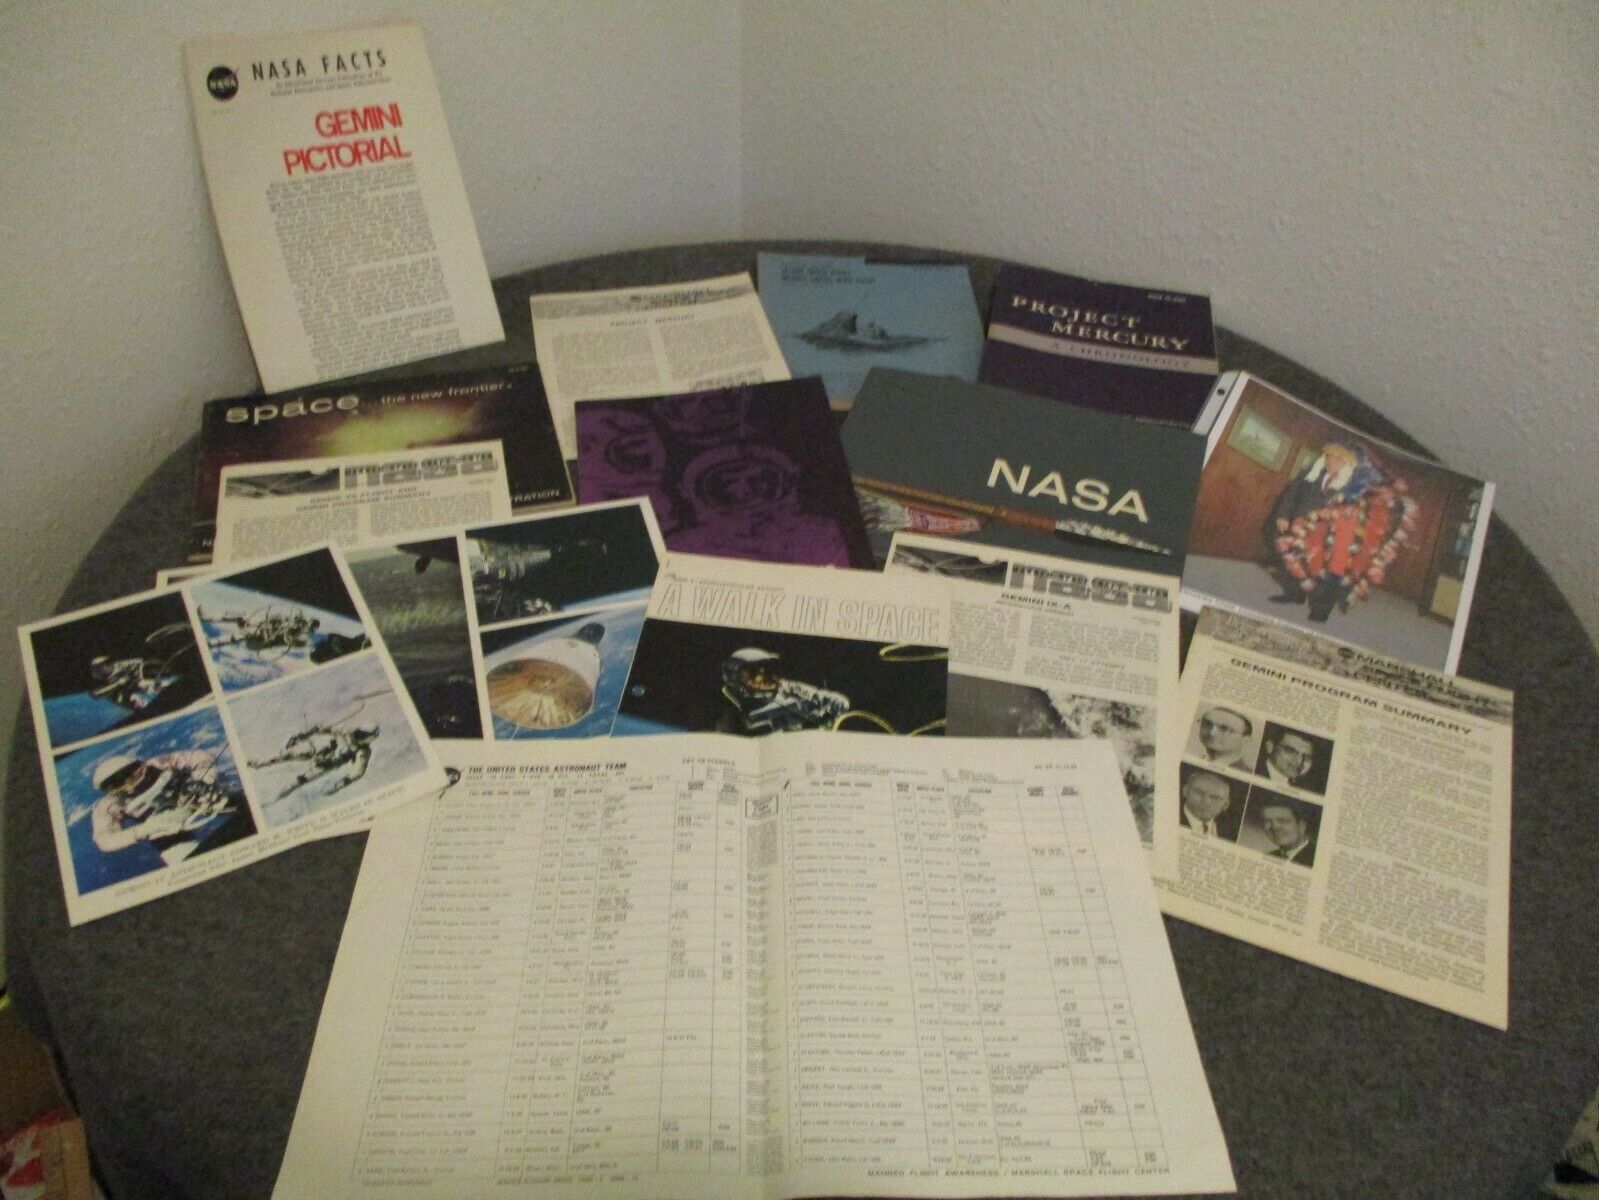 NASA ORIGINAL GEMINI MERCURY MSFC BOOK PICTORIAL POSTER BOOKLETS PHOTOS